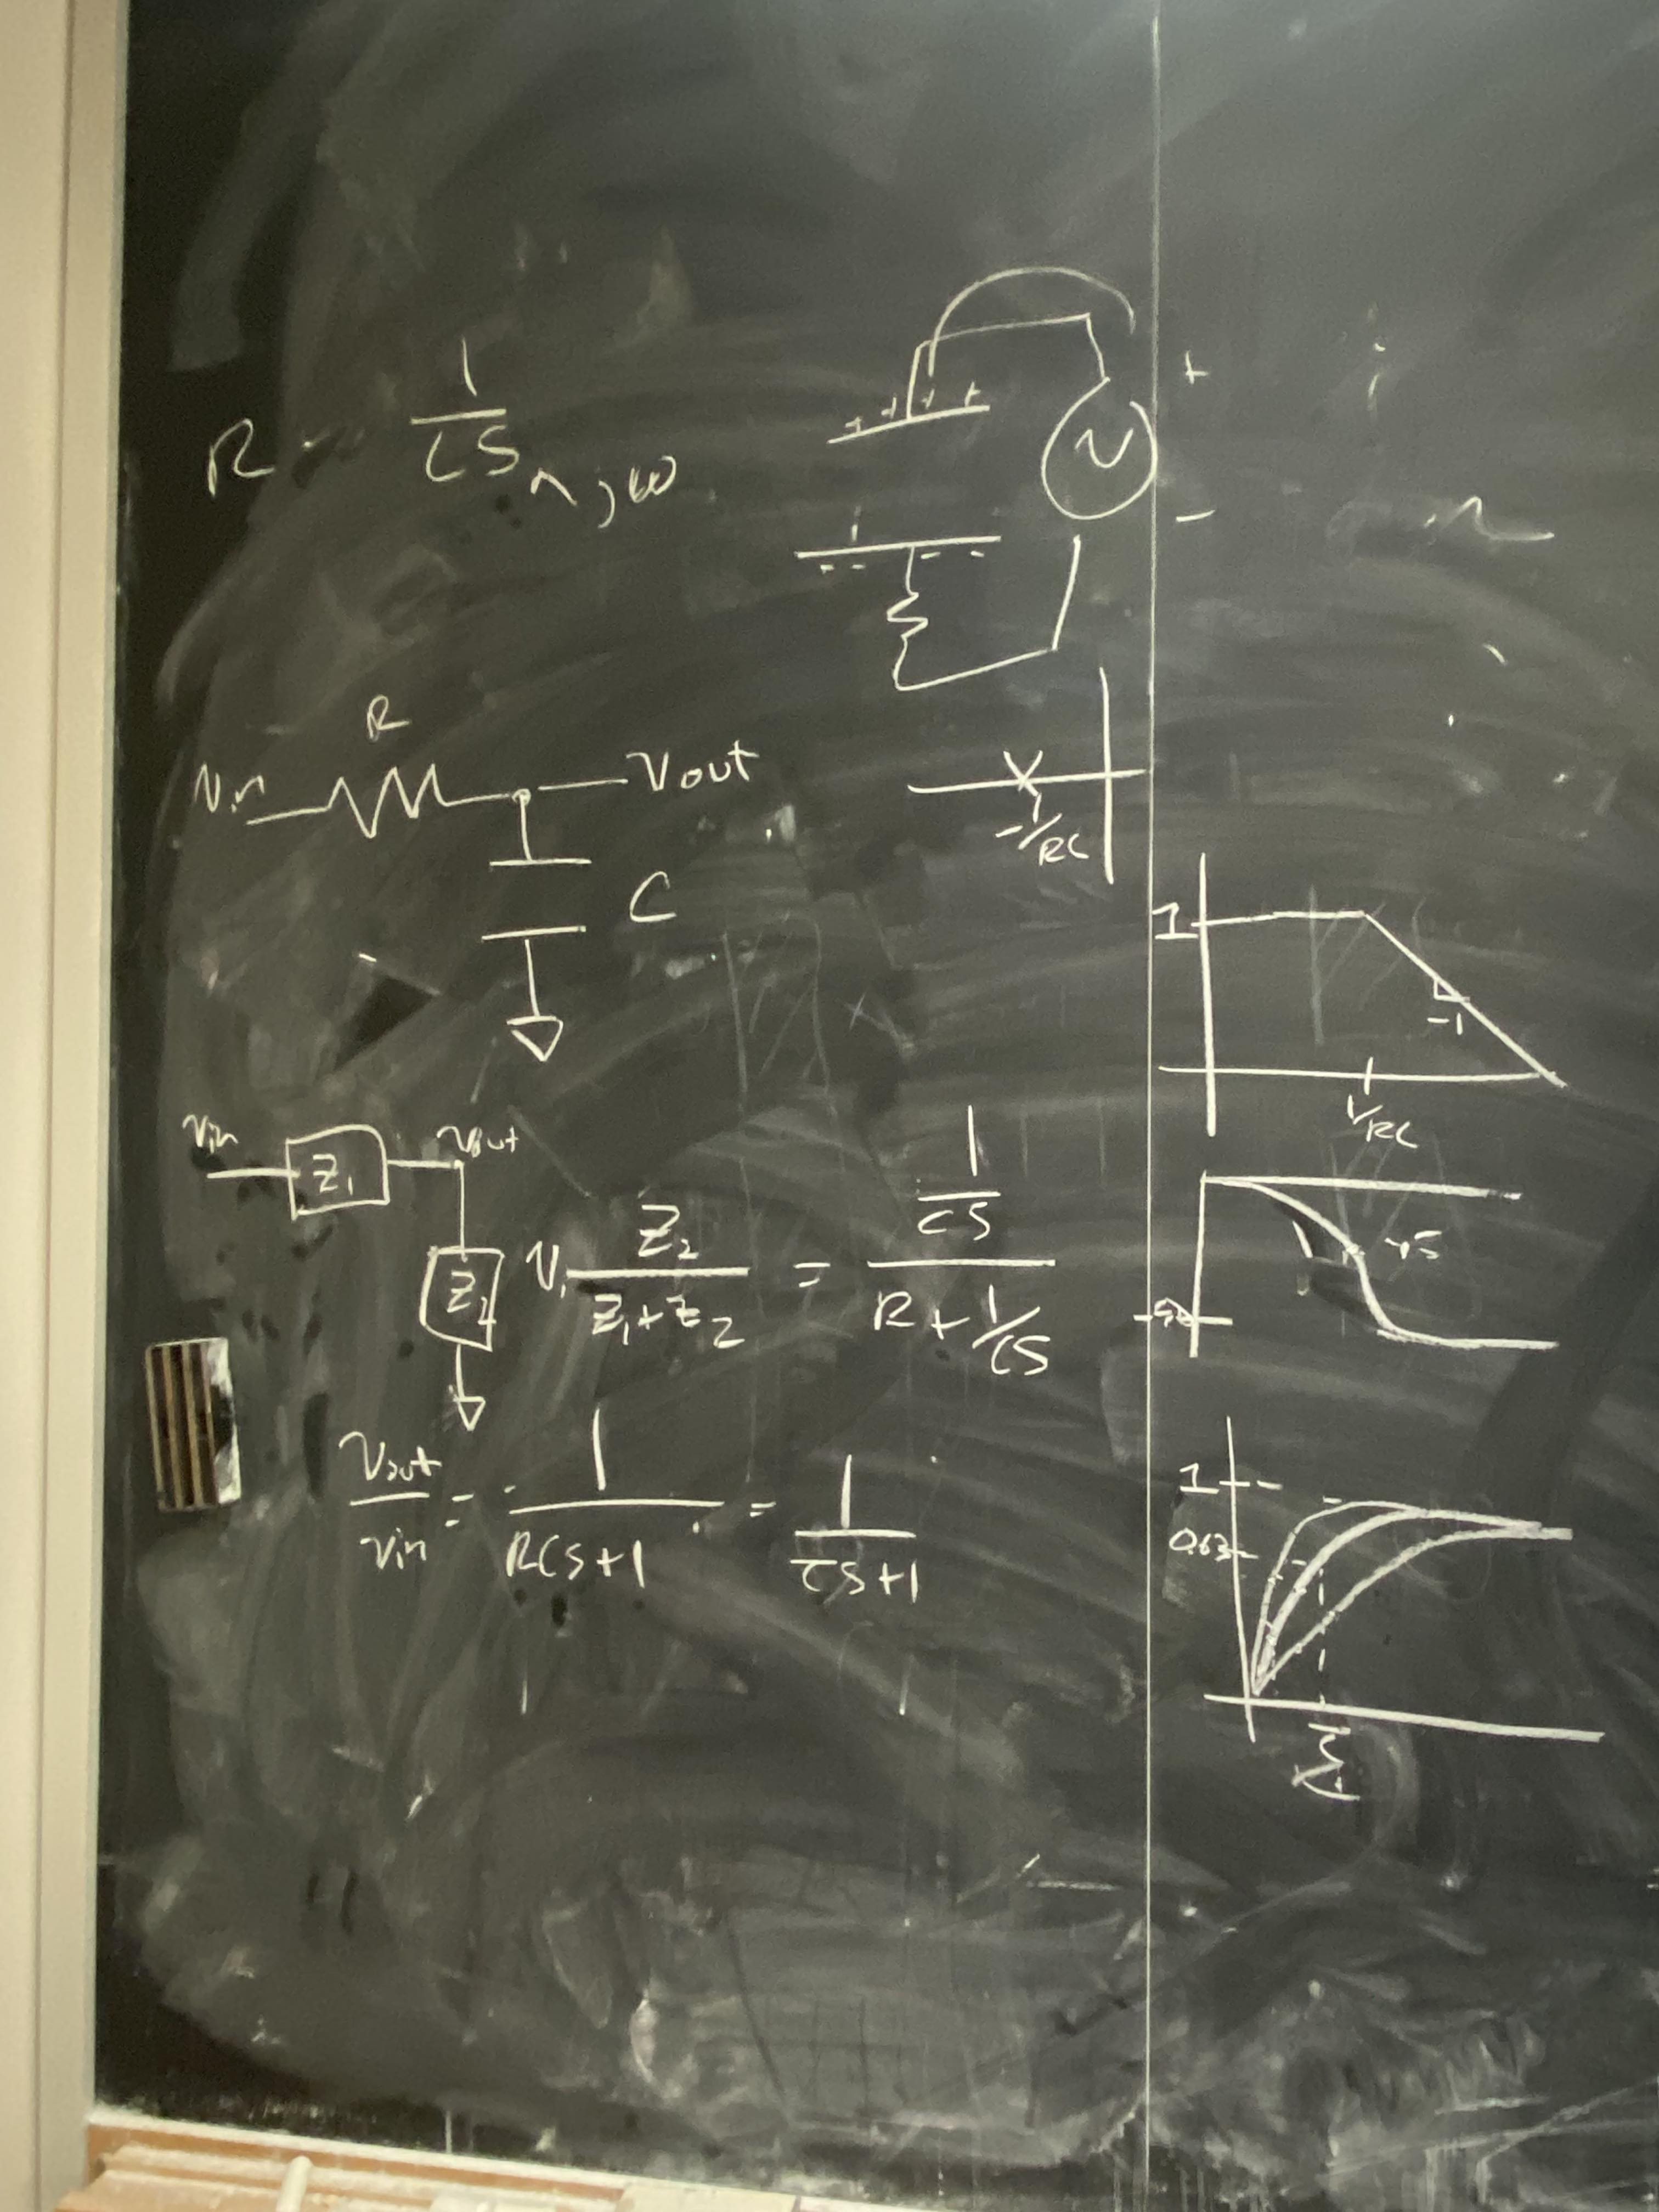 blackboard musings about sensing